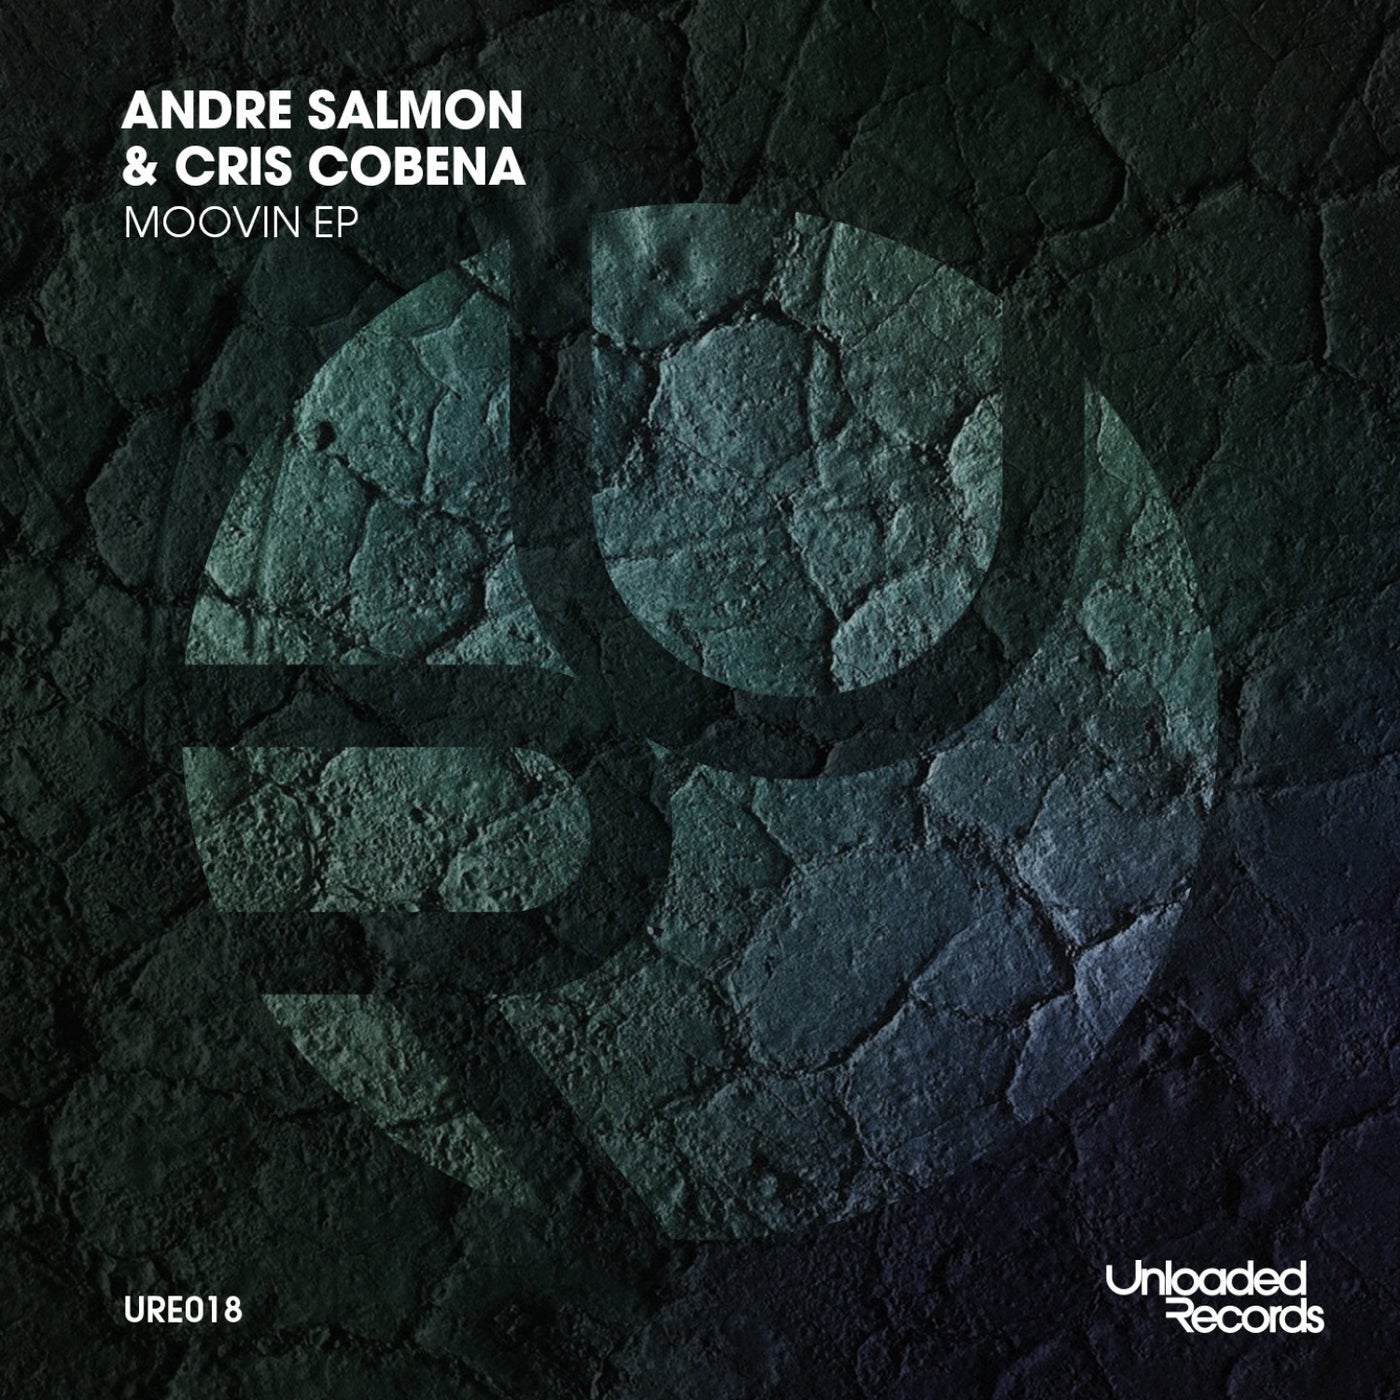 Andre Salmon, Cris Cobena – Moovin EP [URE018]